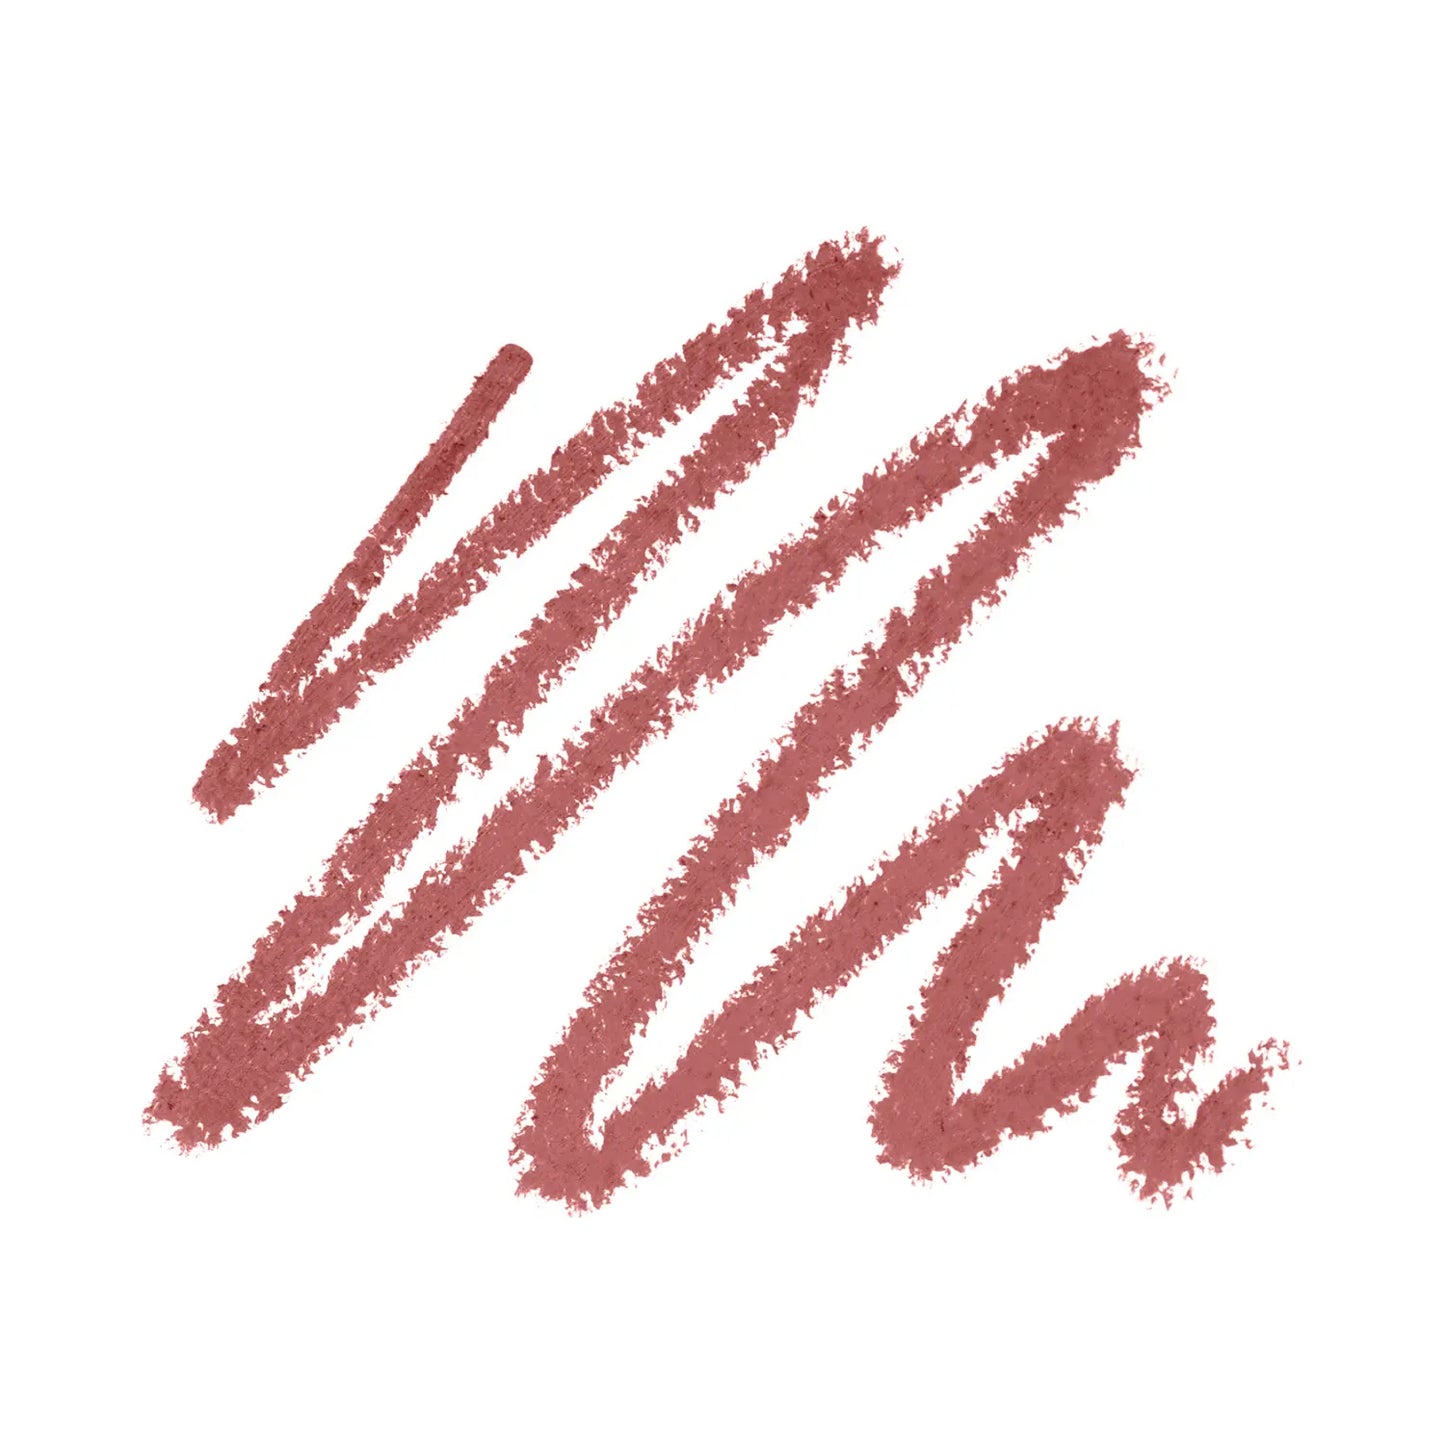 Huda Beauty Lip Contour 2.0 Automatic Matte Lip Pencil - Pinky Brown trial size